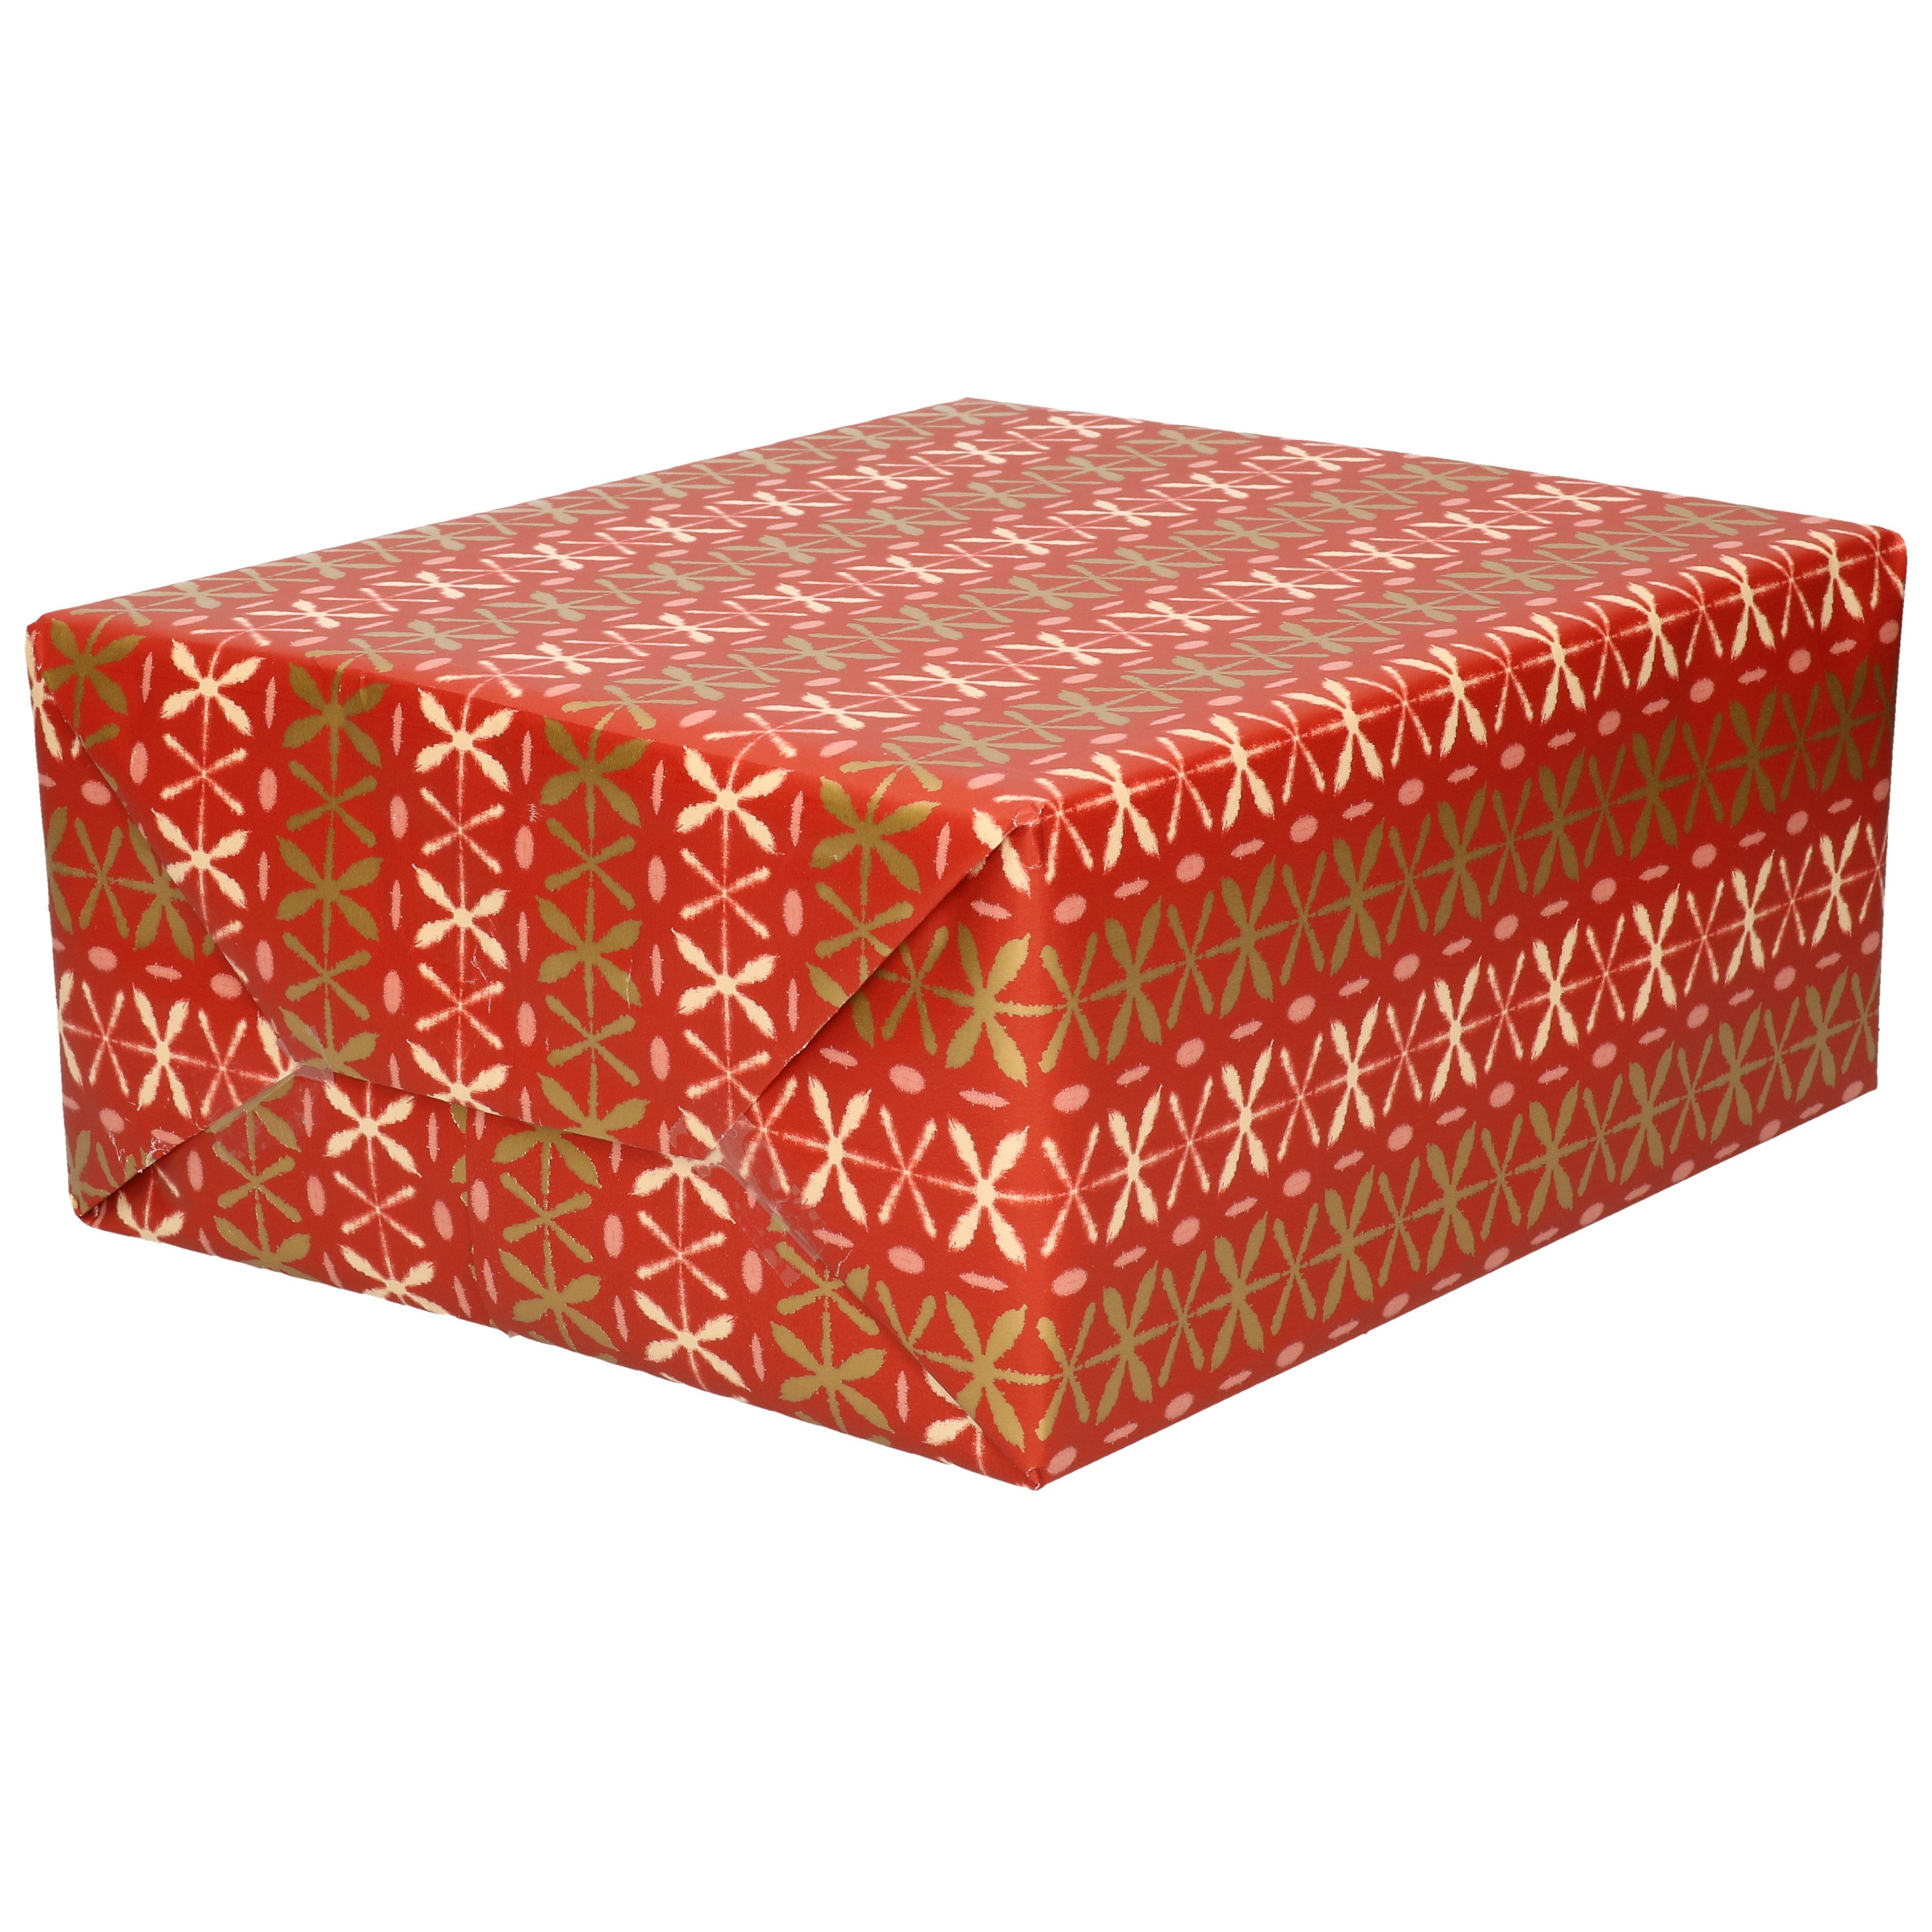 Inpakpapier-cadeaupapier rood roze-gouden kruisjes 200 x 70 cm